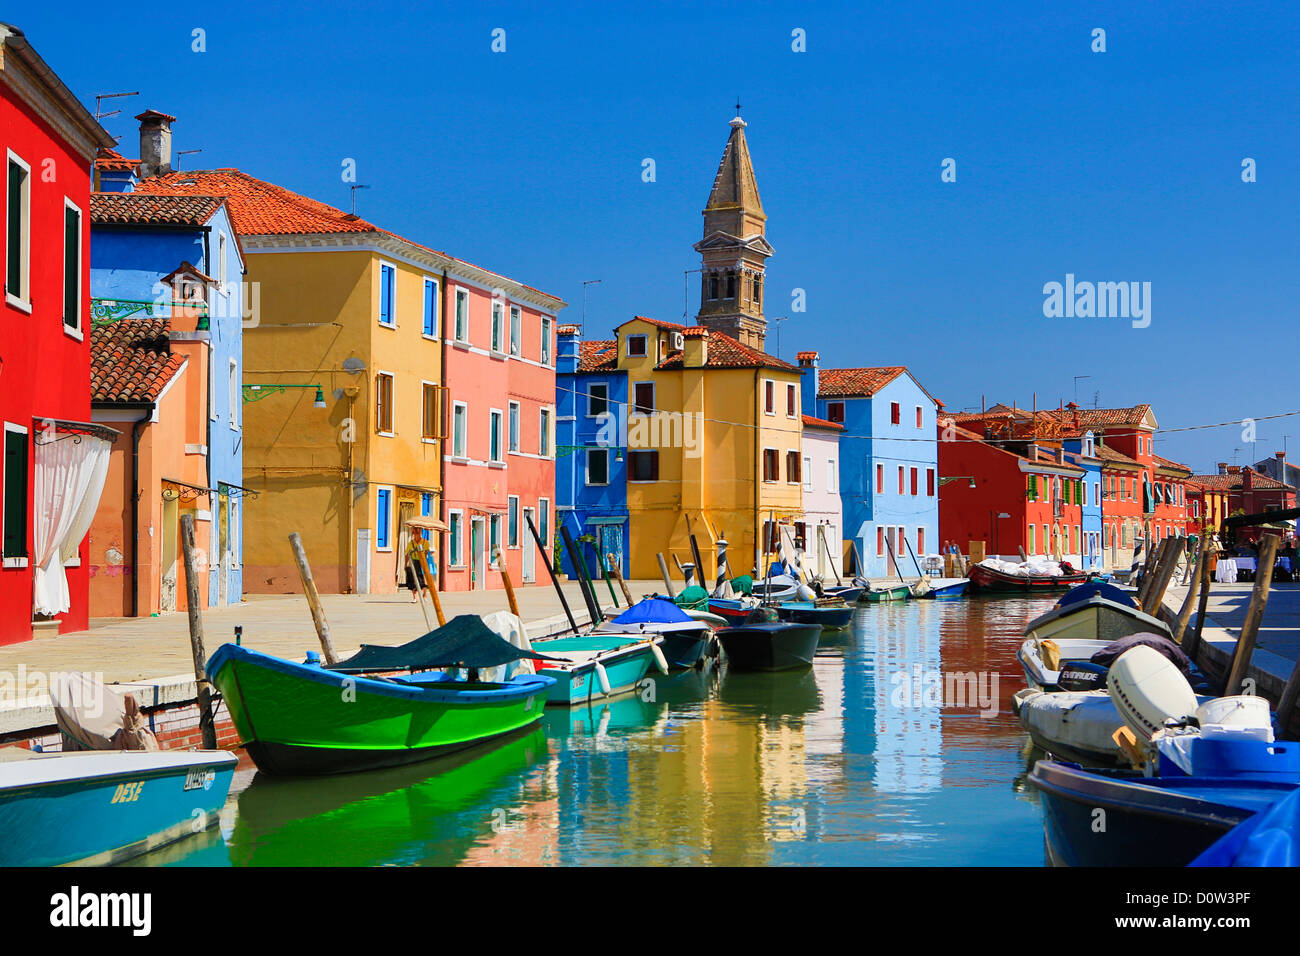 Italien, Europa, Reisen, Architektur, Boote, Burano, Kanal, bunt, Farben, Tourismus, Venedig Stockfoto